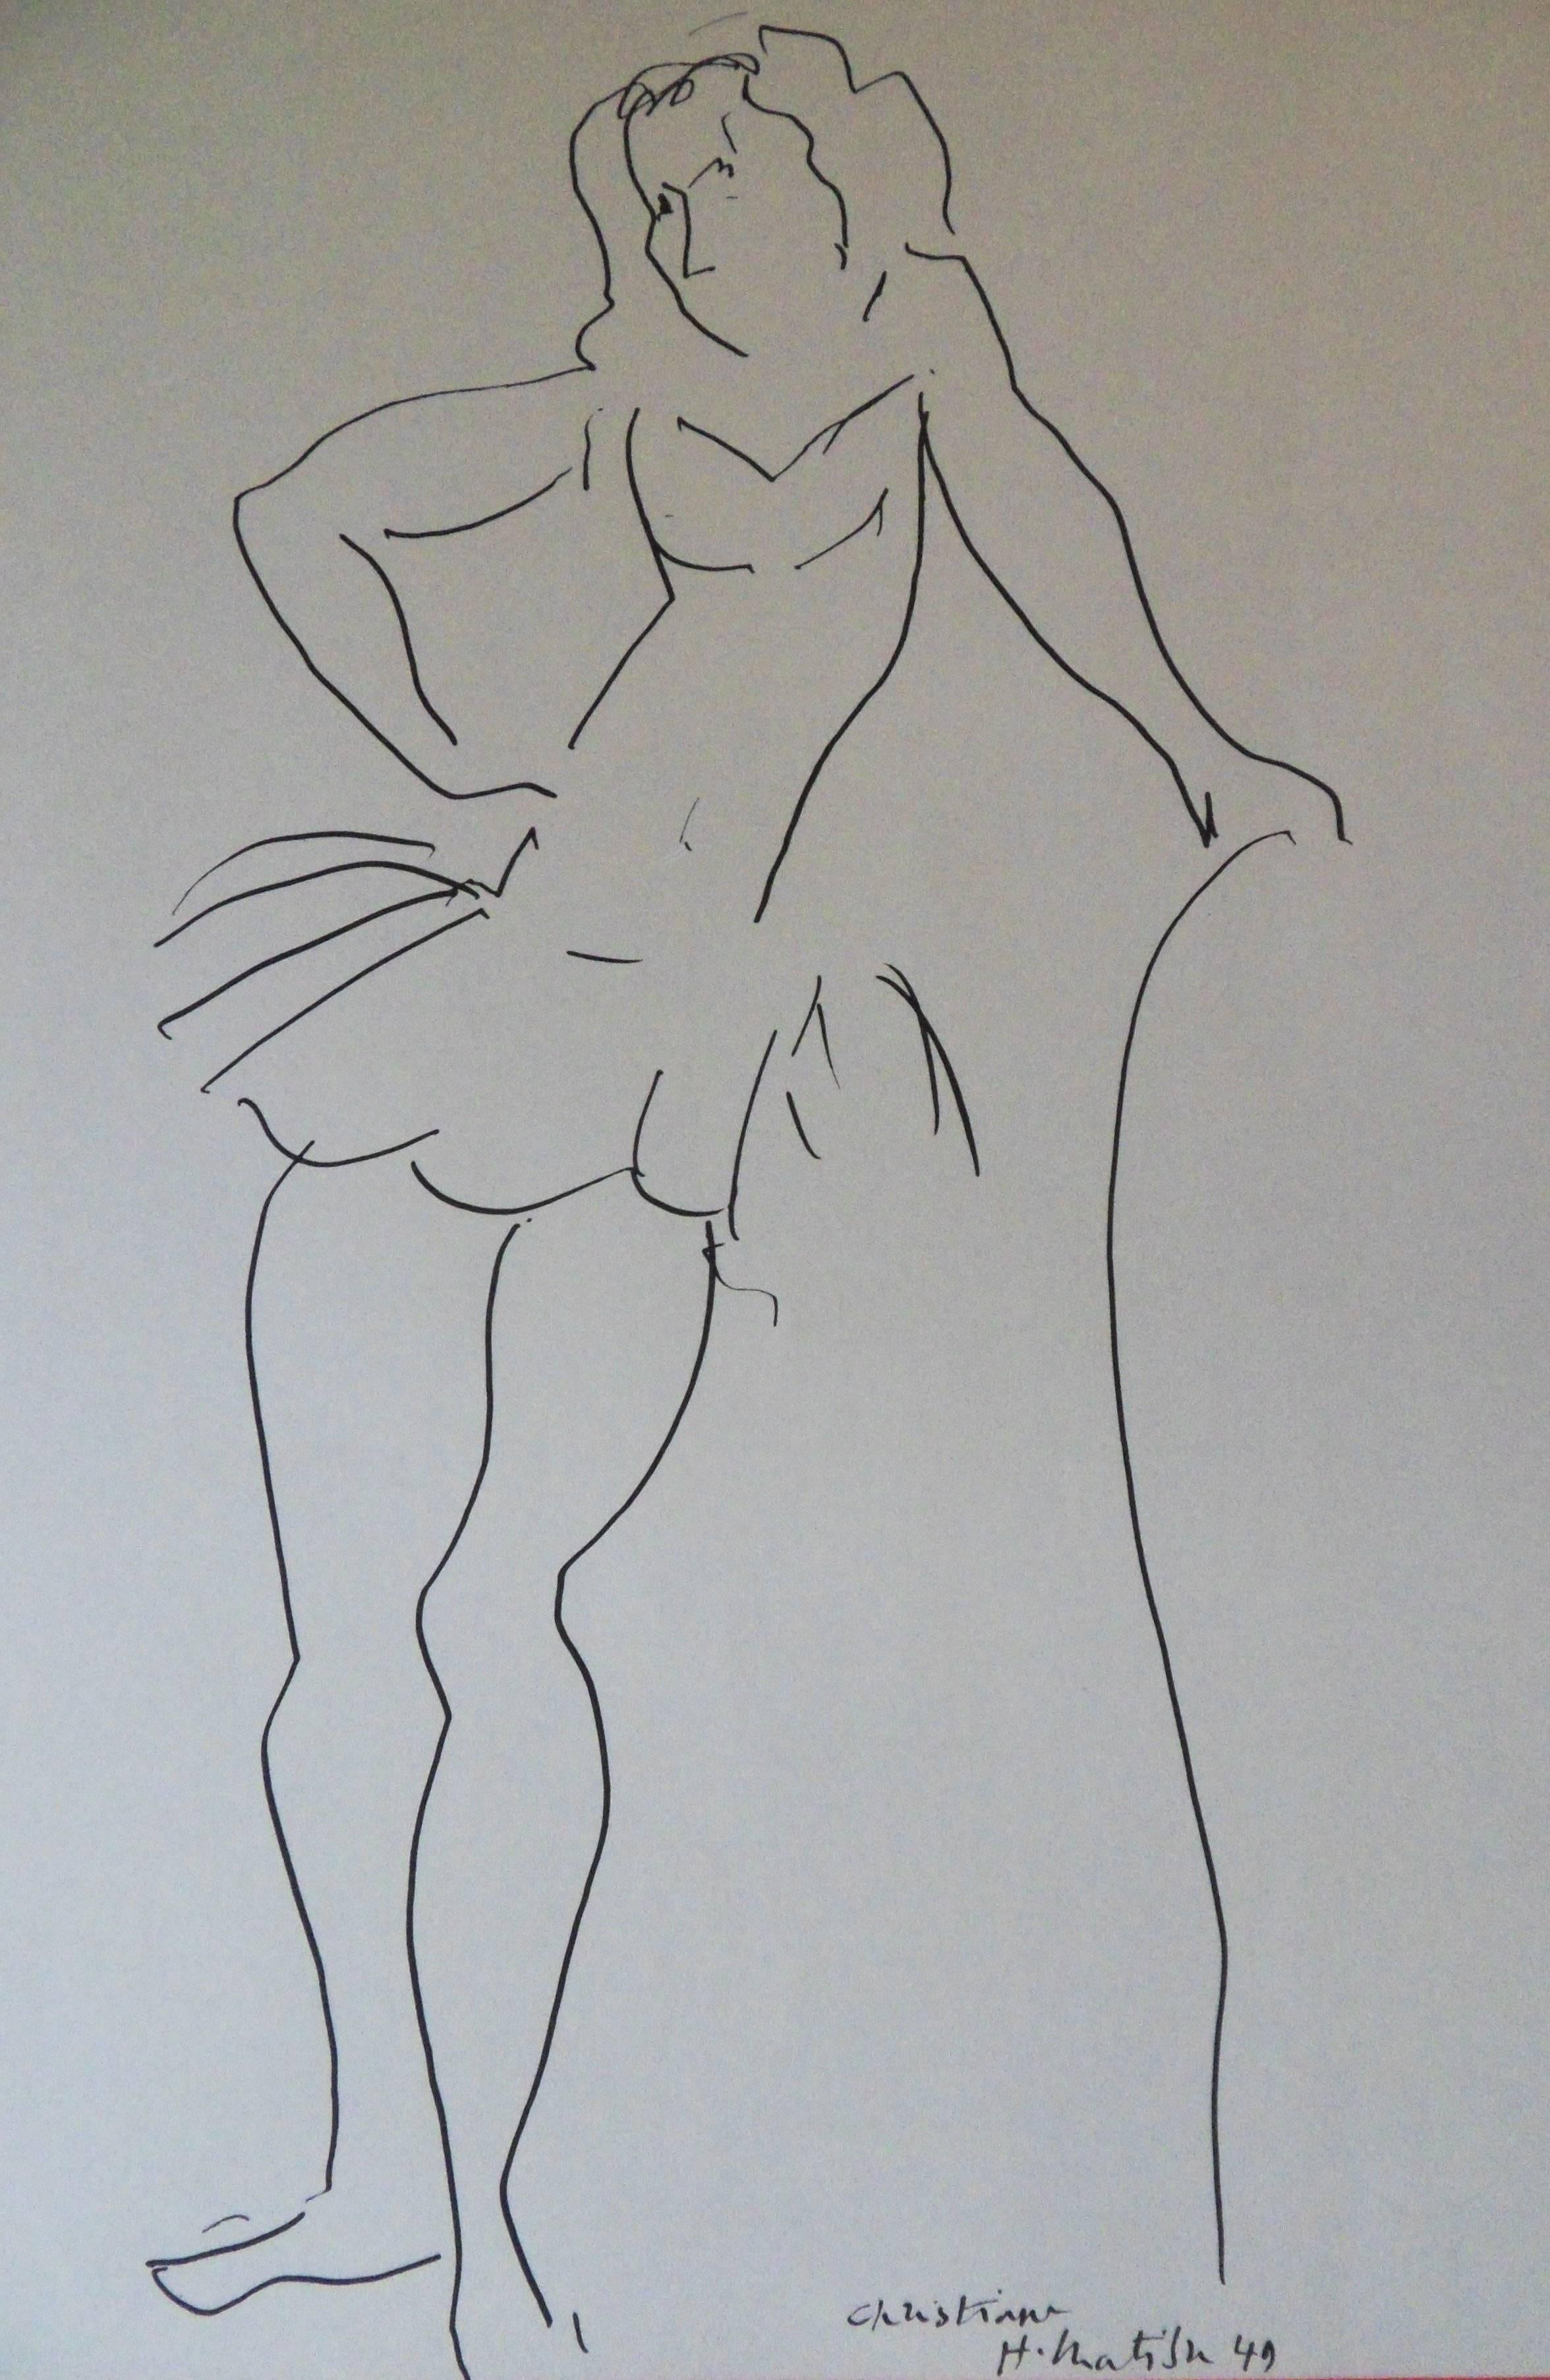 Christiane : Dancer - Lithograph Poster - Galerie Jacques Benador - Modern Print by (after) Henri Matisse